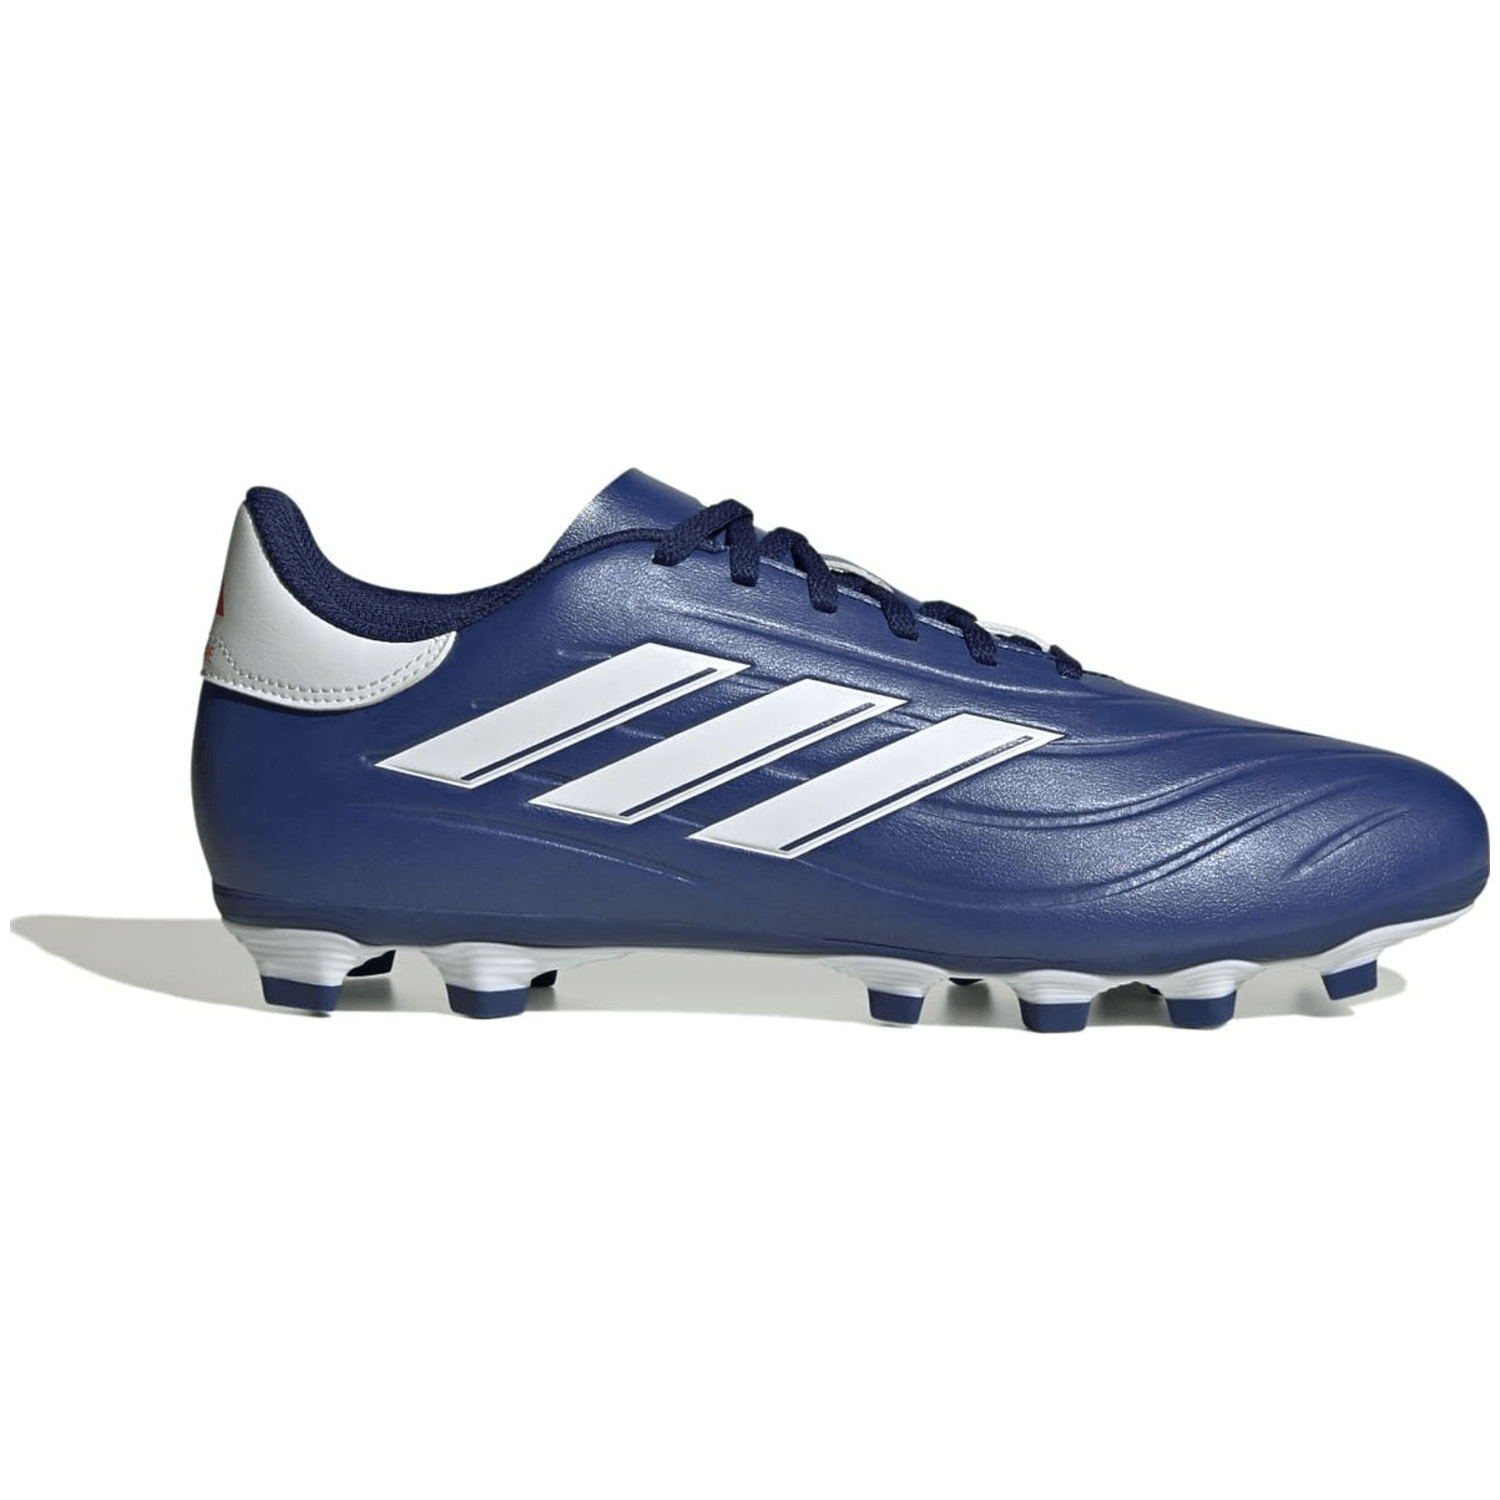 Adidas COPA PURE II.4 Fußballschuh Flexible Ground Unisex